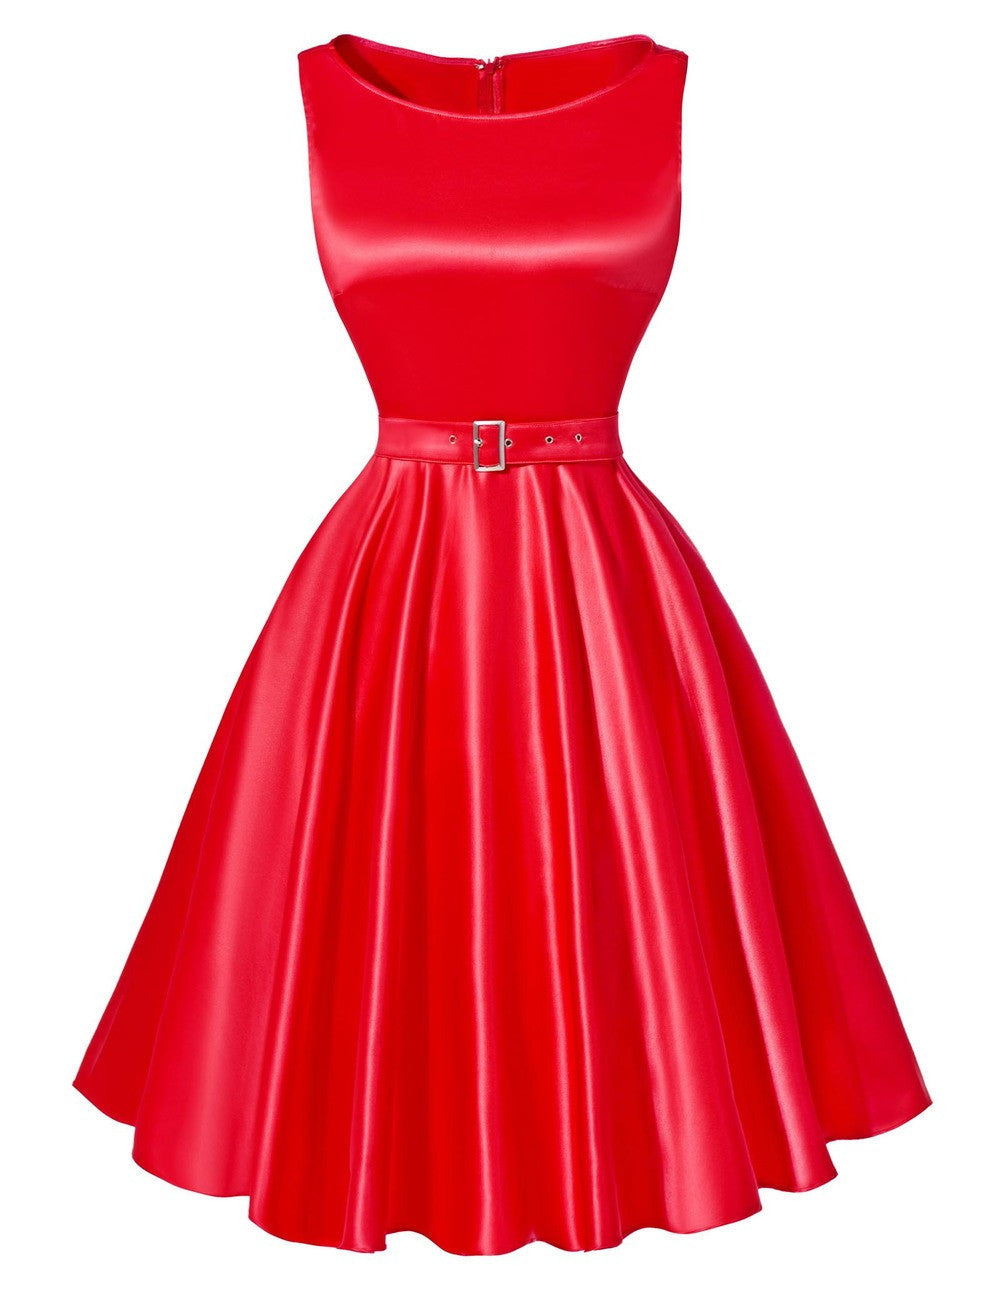 Online discount shop Australia - Jurken Women Dress Black Red Purple Summer Audrey Hepburn 50s 60s Vintage Dresses Vestidos Plus Size Rockabilly Party Dress